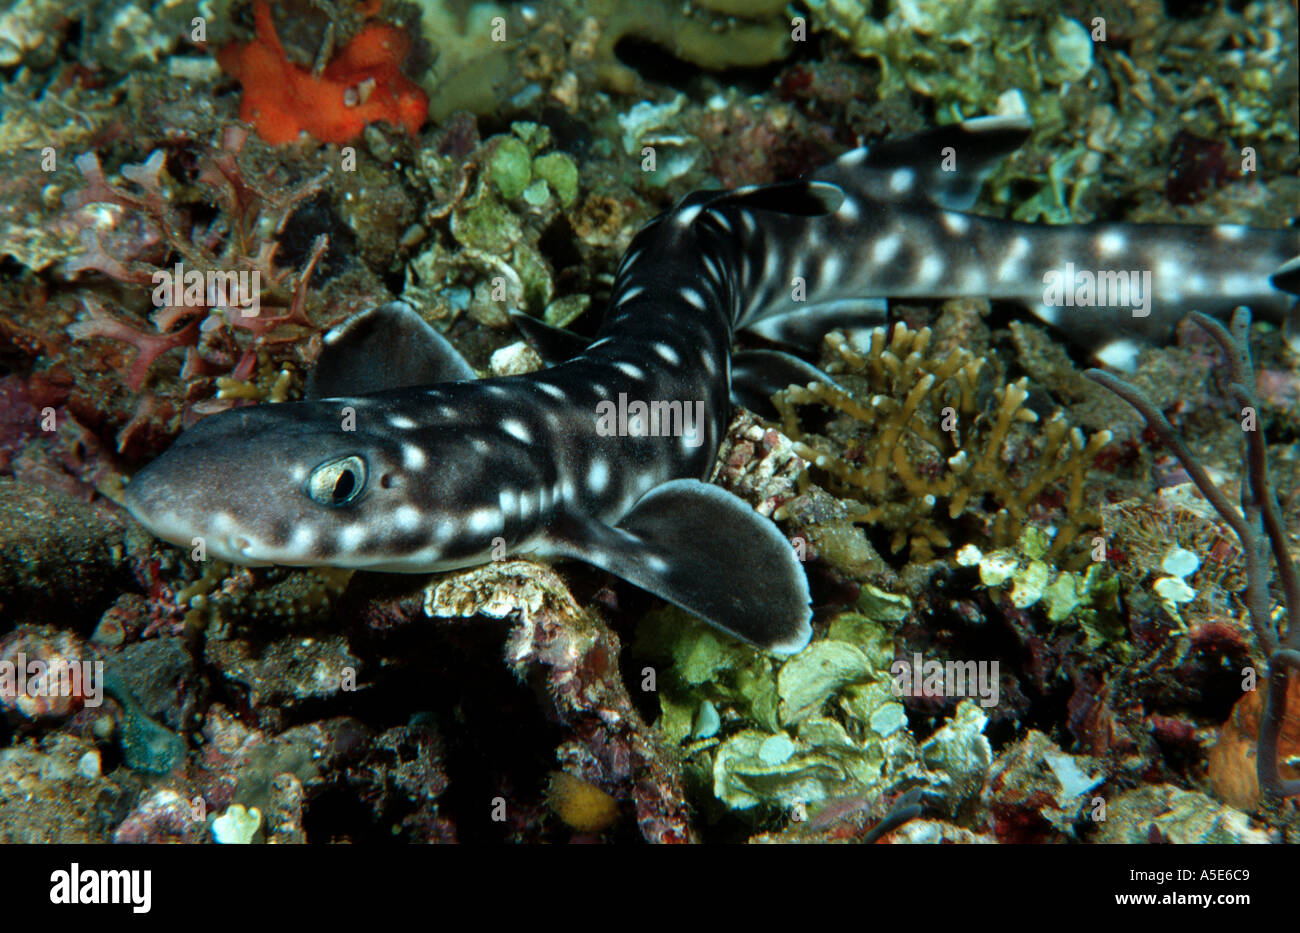 Atelomycterus marmoratus Catshark lying in coral reef Stock Photo